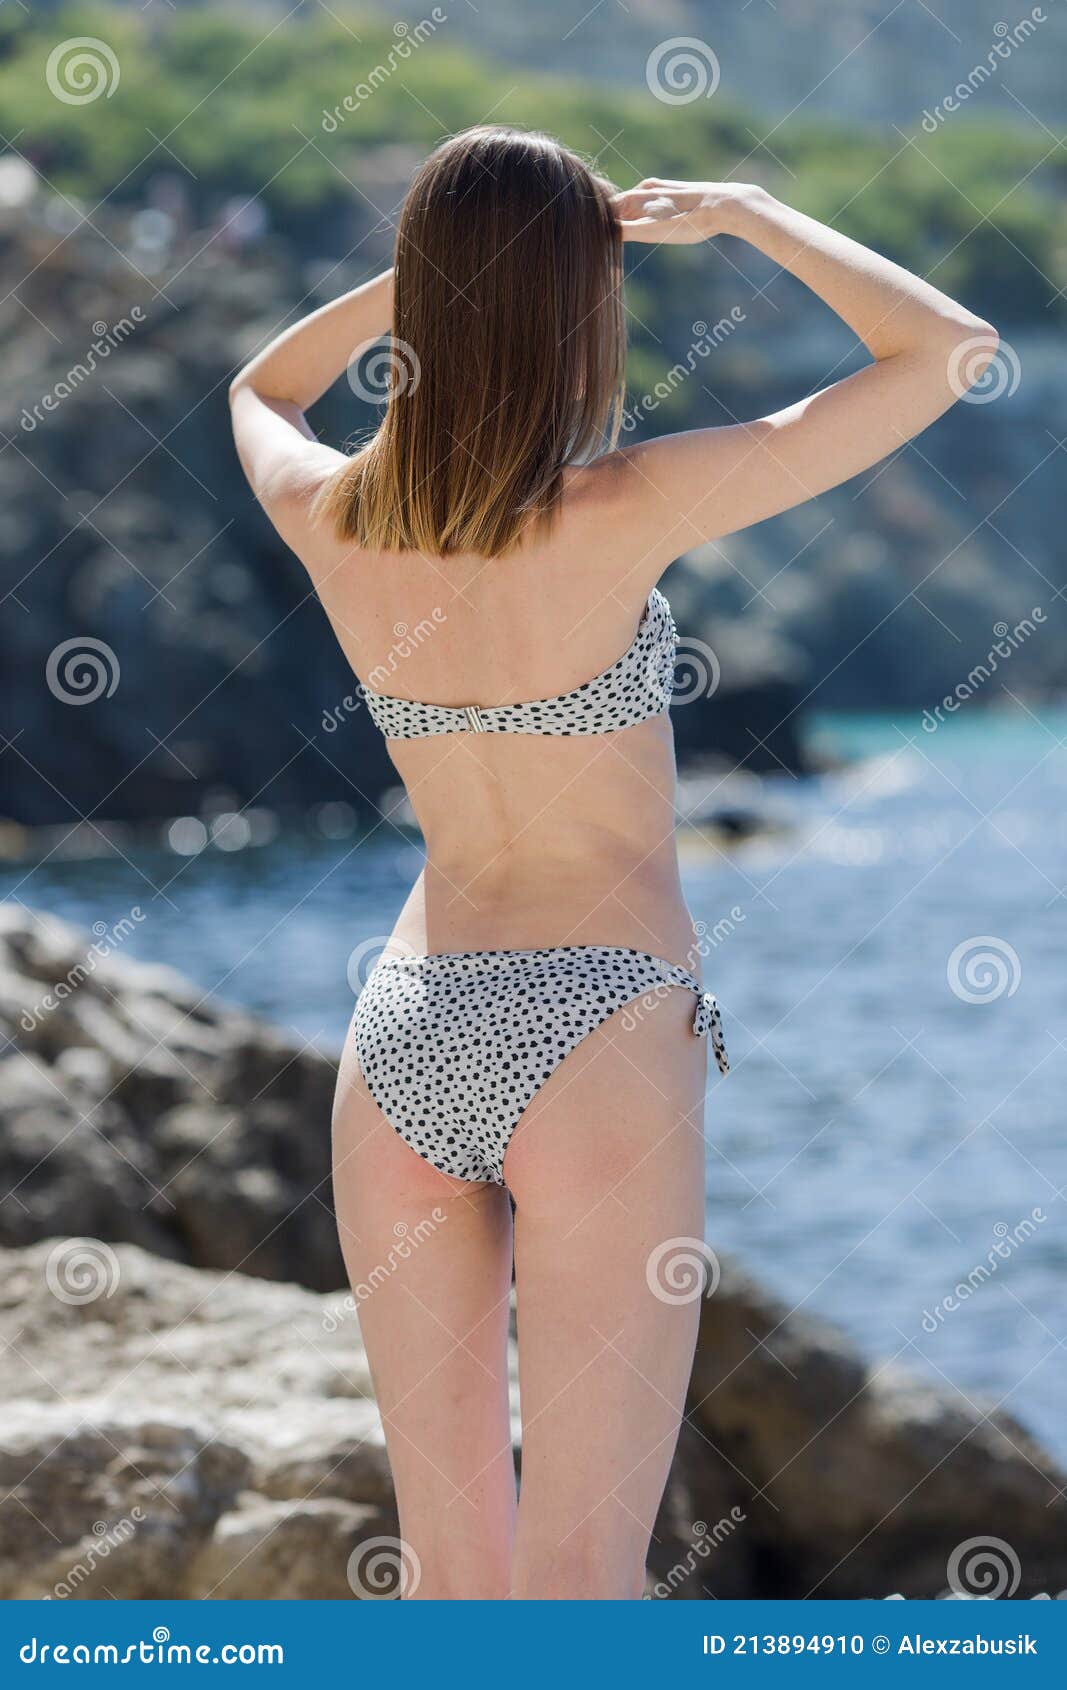 cindy clare recommends skinny girl in bikini pic